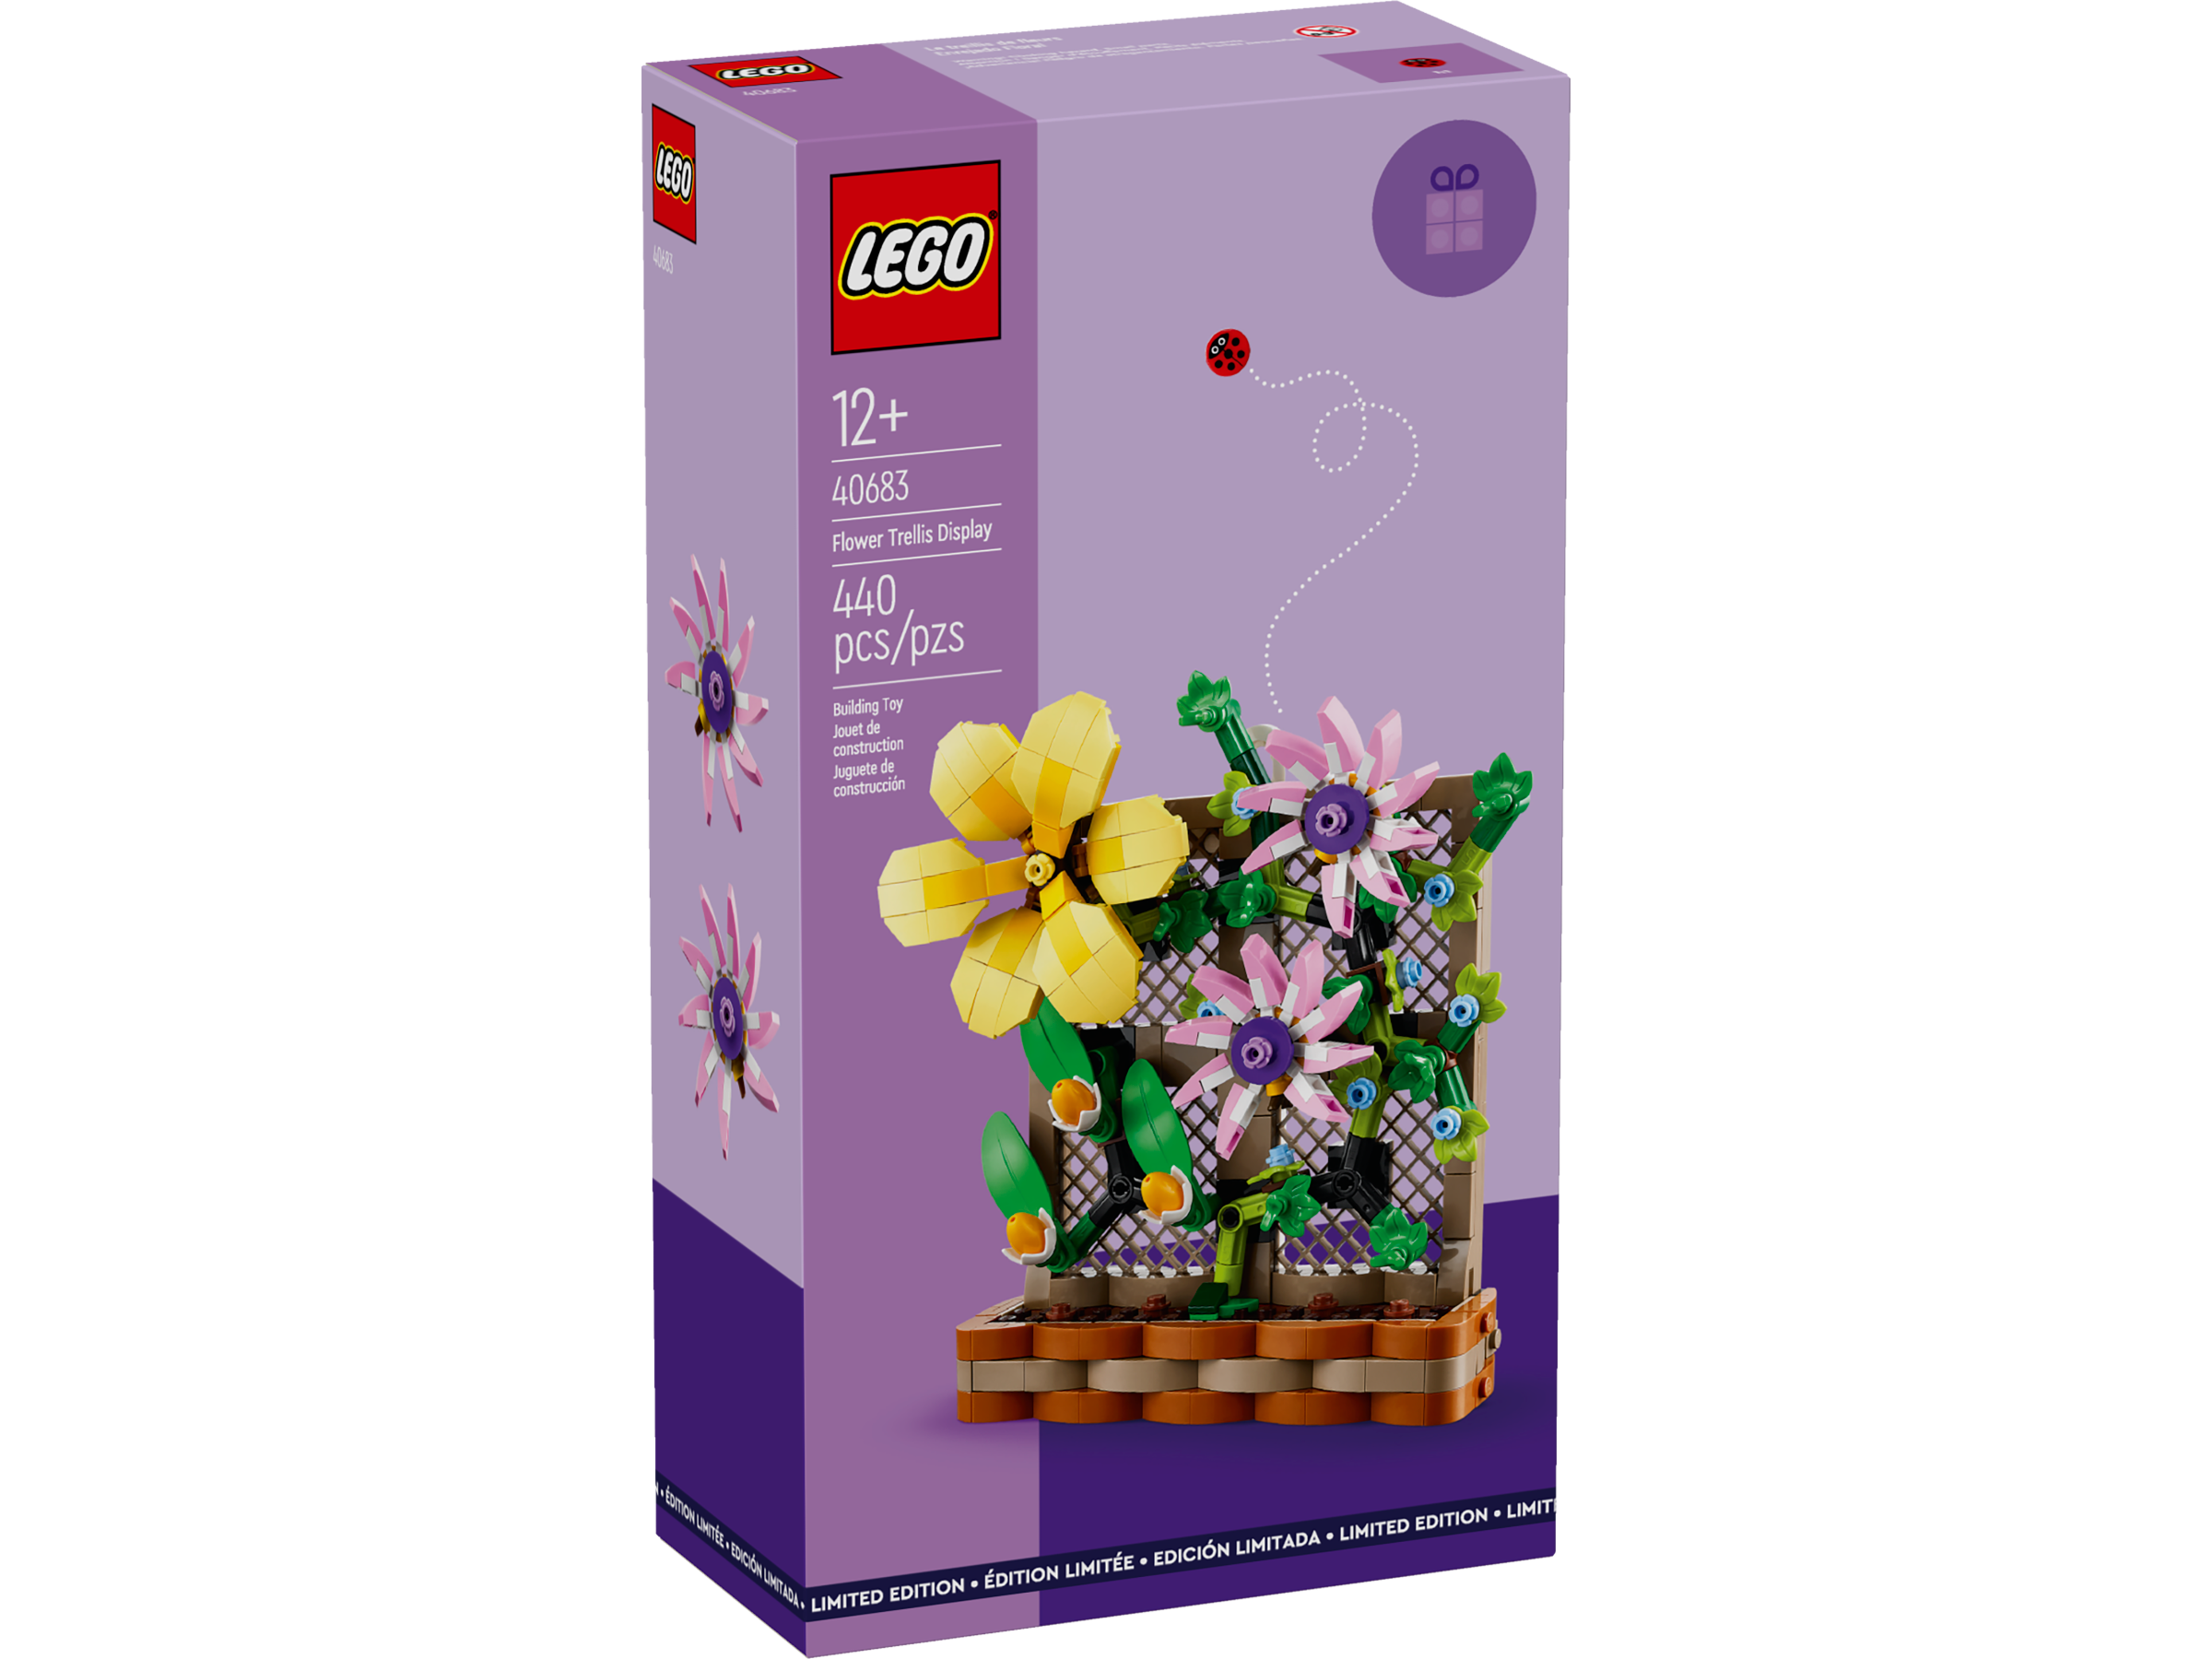 LEGO Flower Trellis Display GWP Set (40683) [RETIRED]